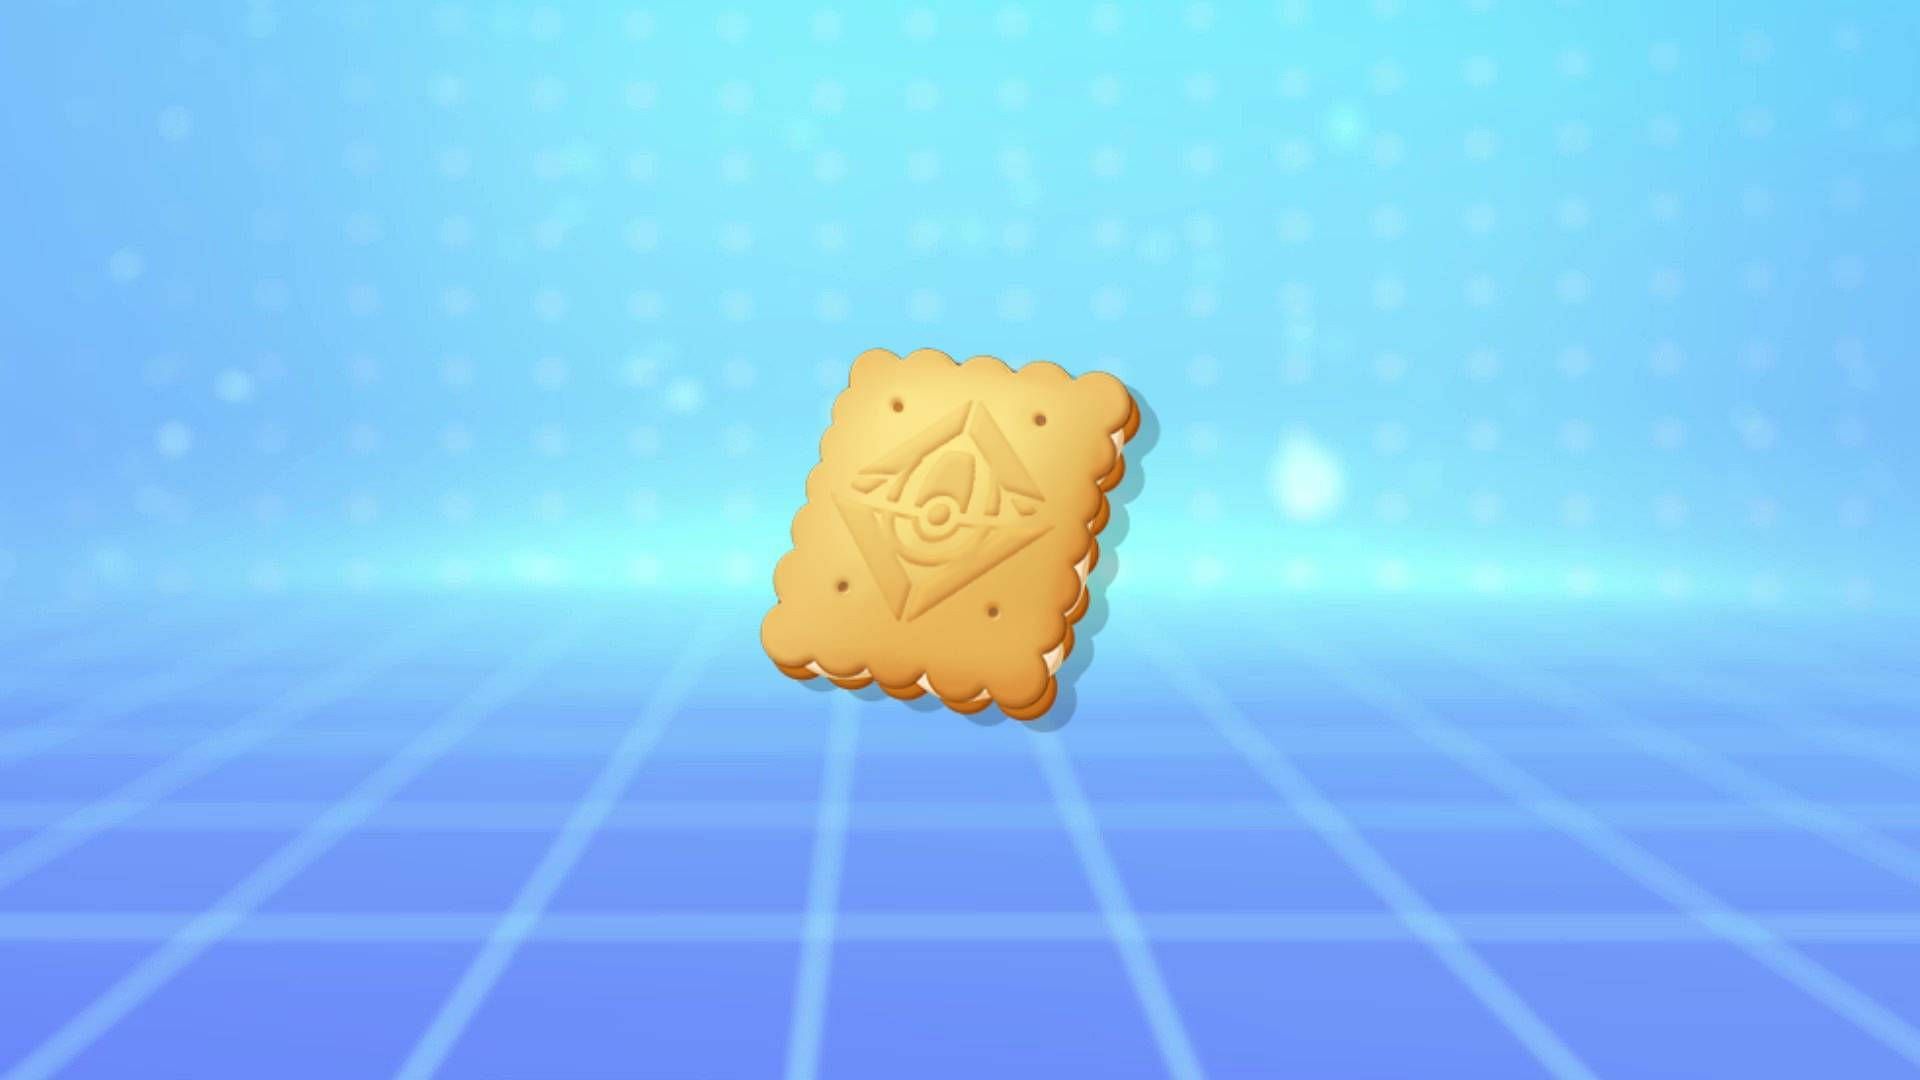 The Aeos Cookie as seen in Pokemon Unite (Image via The Pokemon Company)